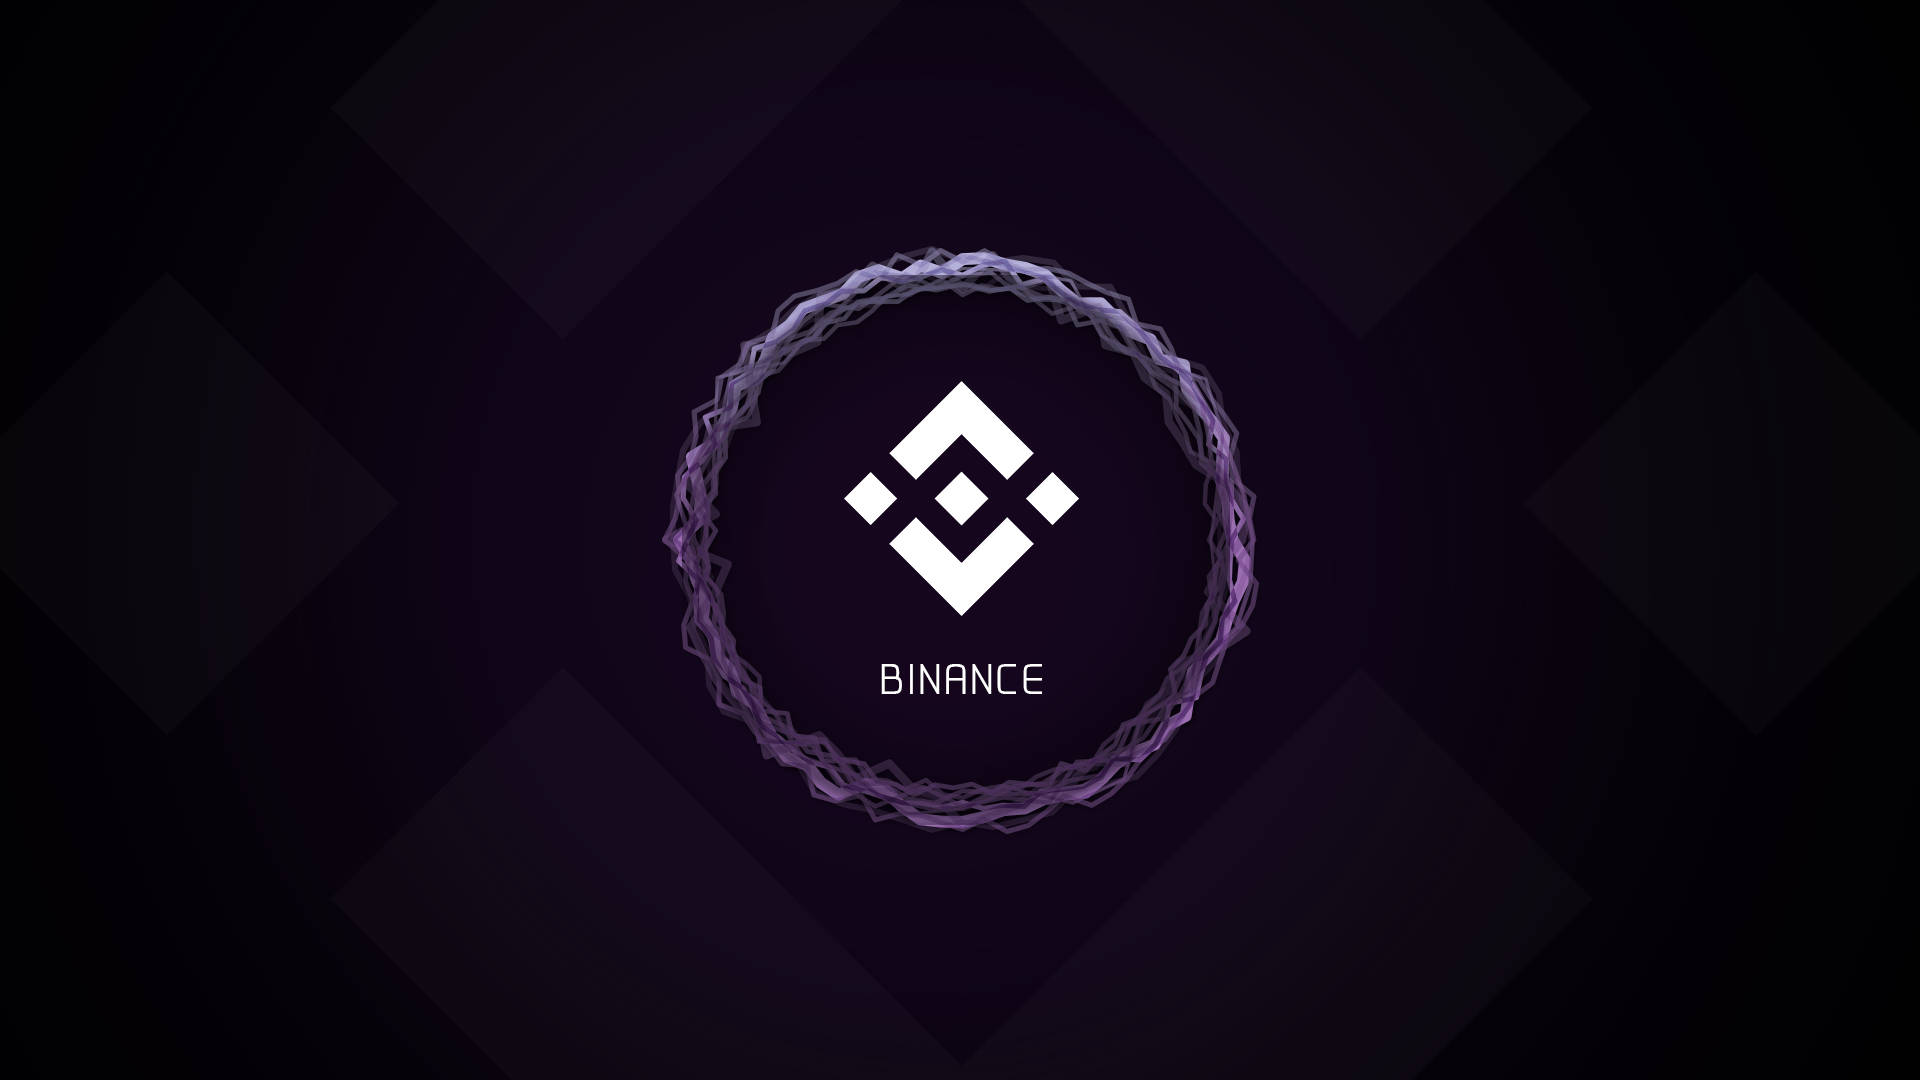 Binance In A Circle Background